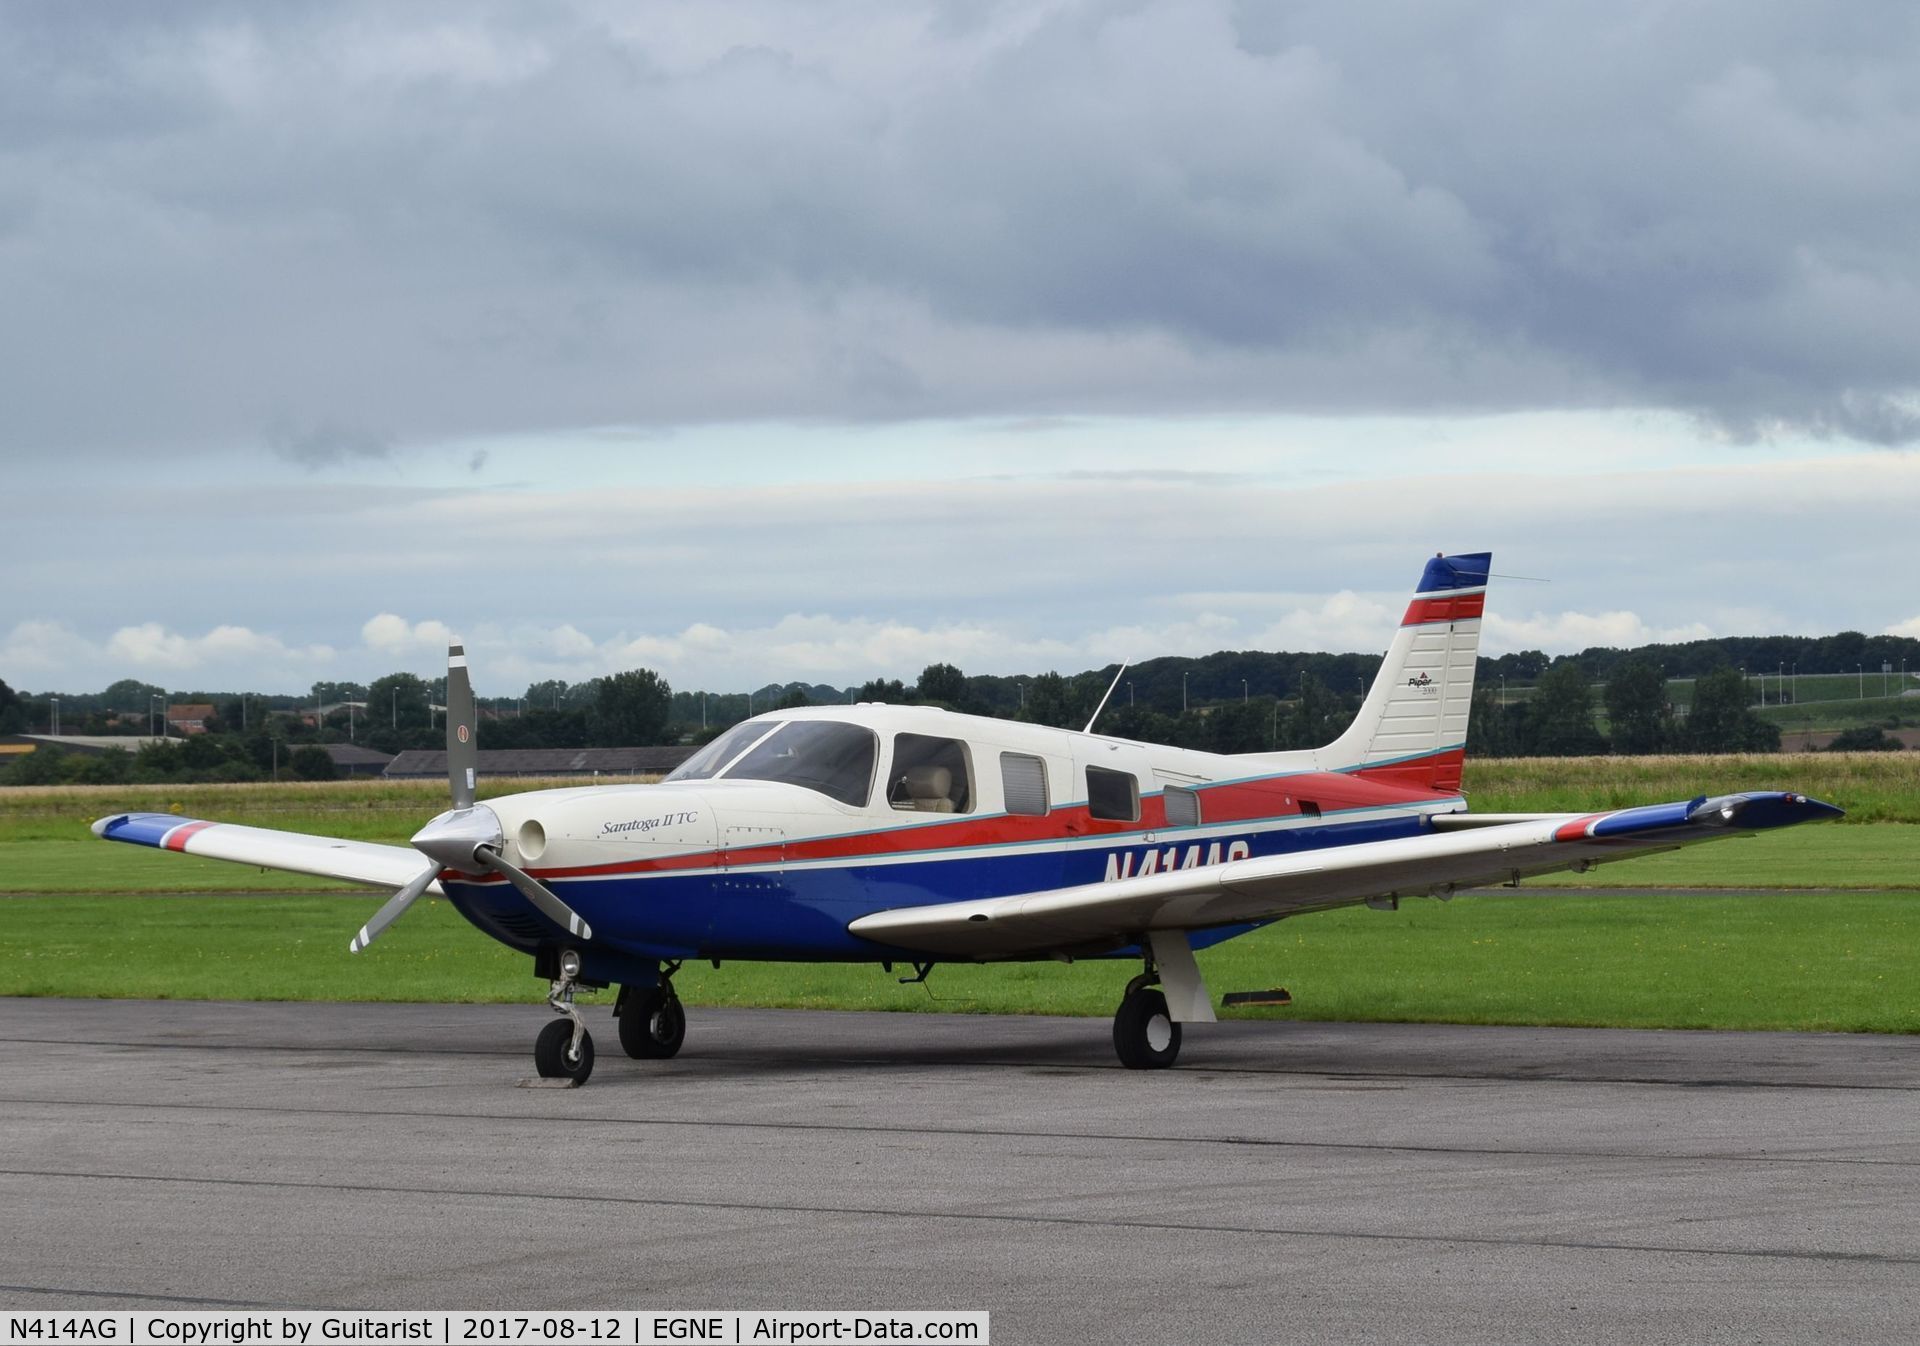 N414AG, 2000 Piper PA-32R-301T Turbo Saratoga C/N 3257184, At Gamston